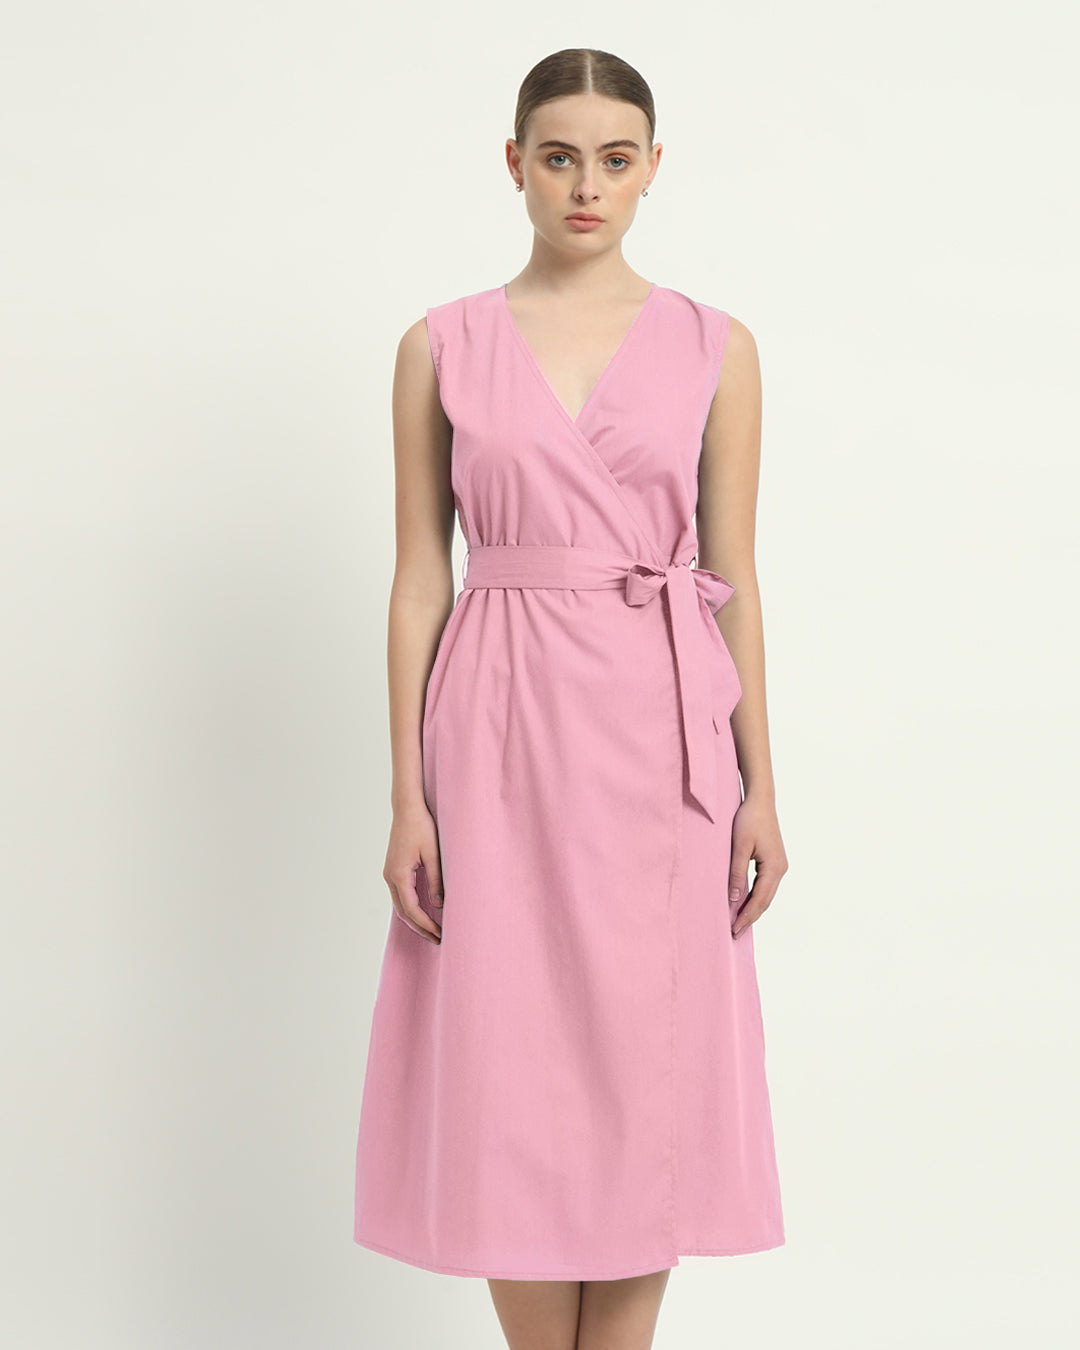 The Fondant Pink Windsor Cotton Dress